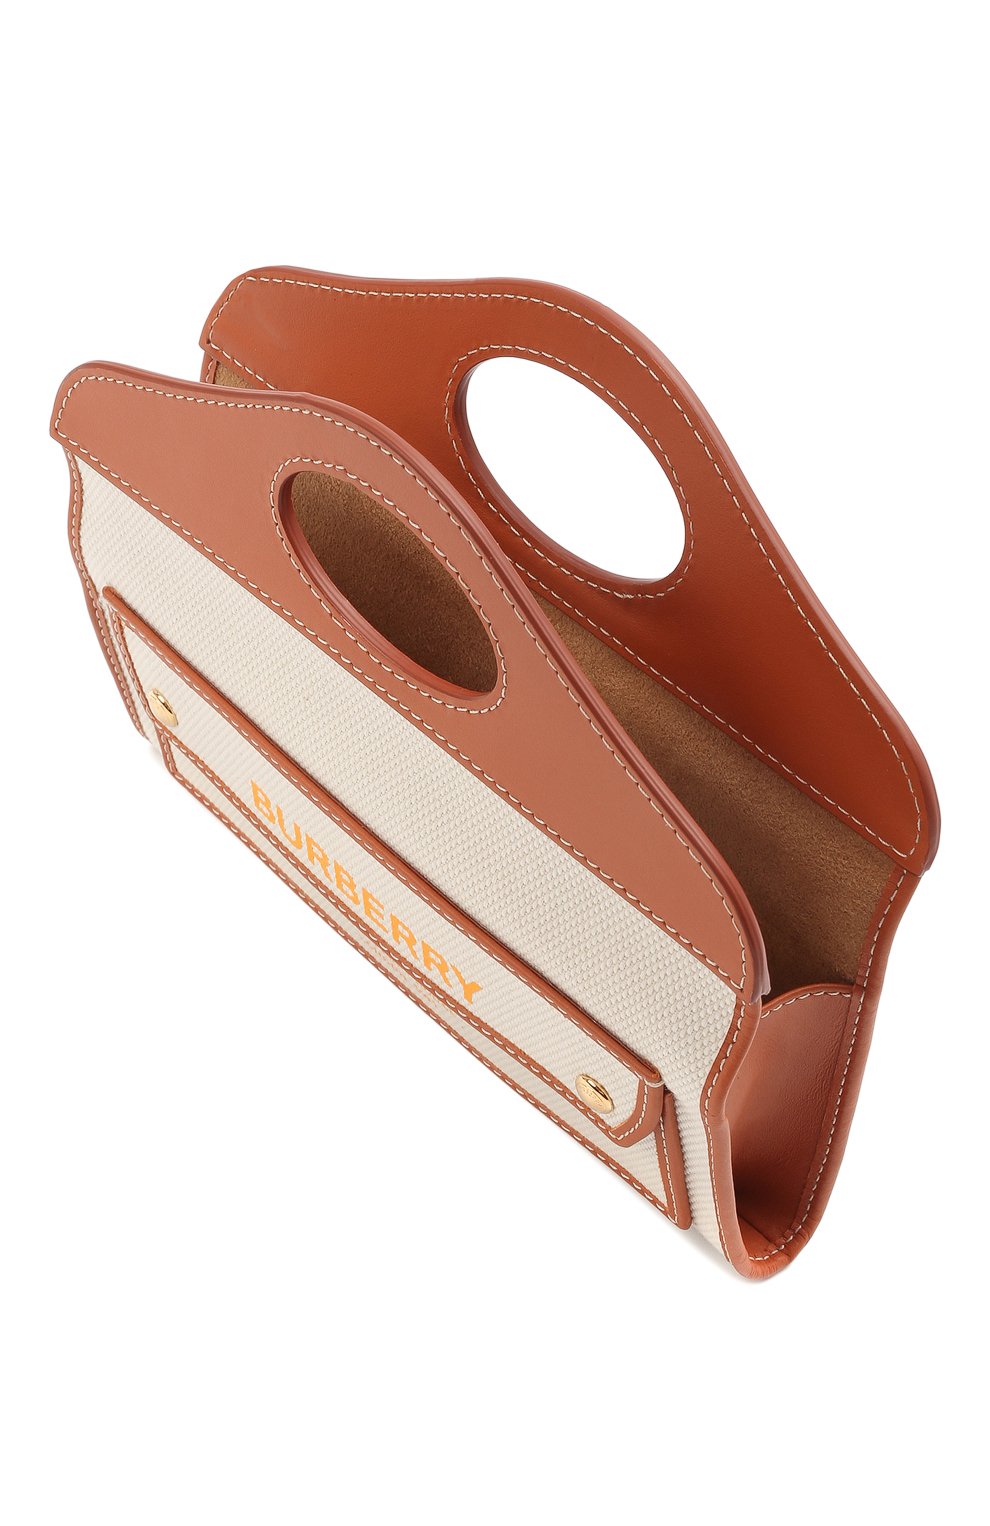 Женская сумка pocket small BURBERRY коричневого цвета, арт. 8036740 | Фото 4 (Сумки-технические: Сумки через плечо, Сумки top-handle; Ремень/цепочка: На ремешке; Материал: Текстиль; Размер: small)